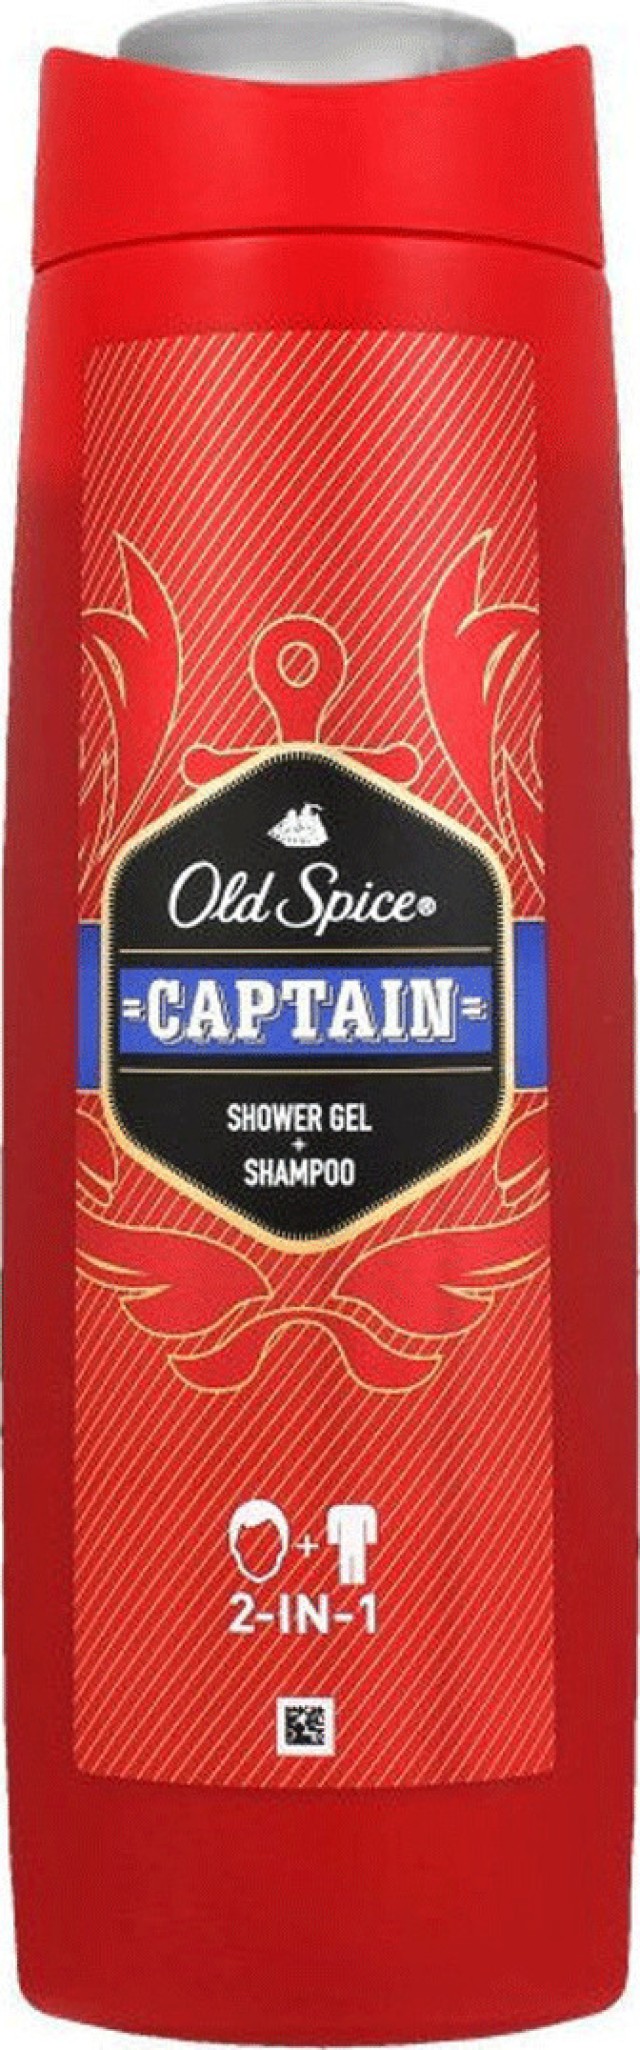 Old Spice Captain Shower Gel - Shampoo Ανδρικό Αφρόλουτρο και Σαμπουάν 2 σε 1 400ml